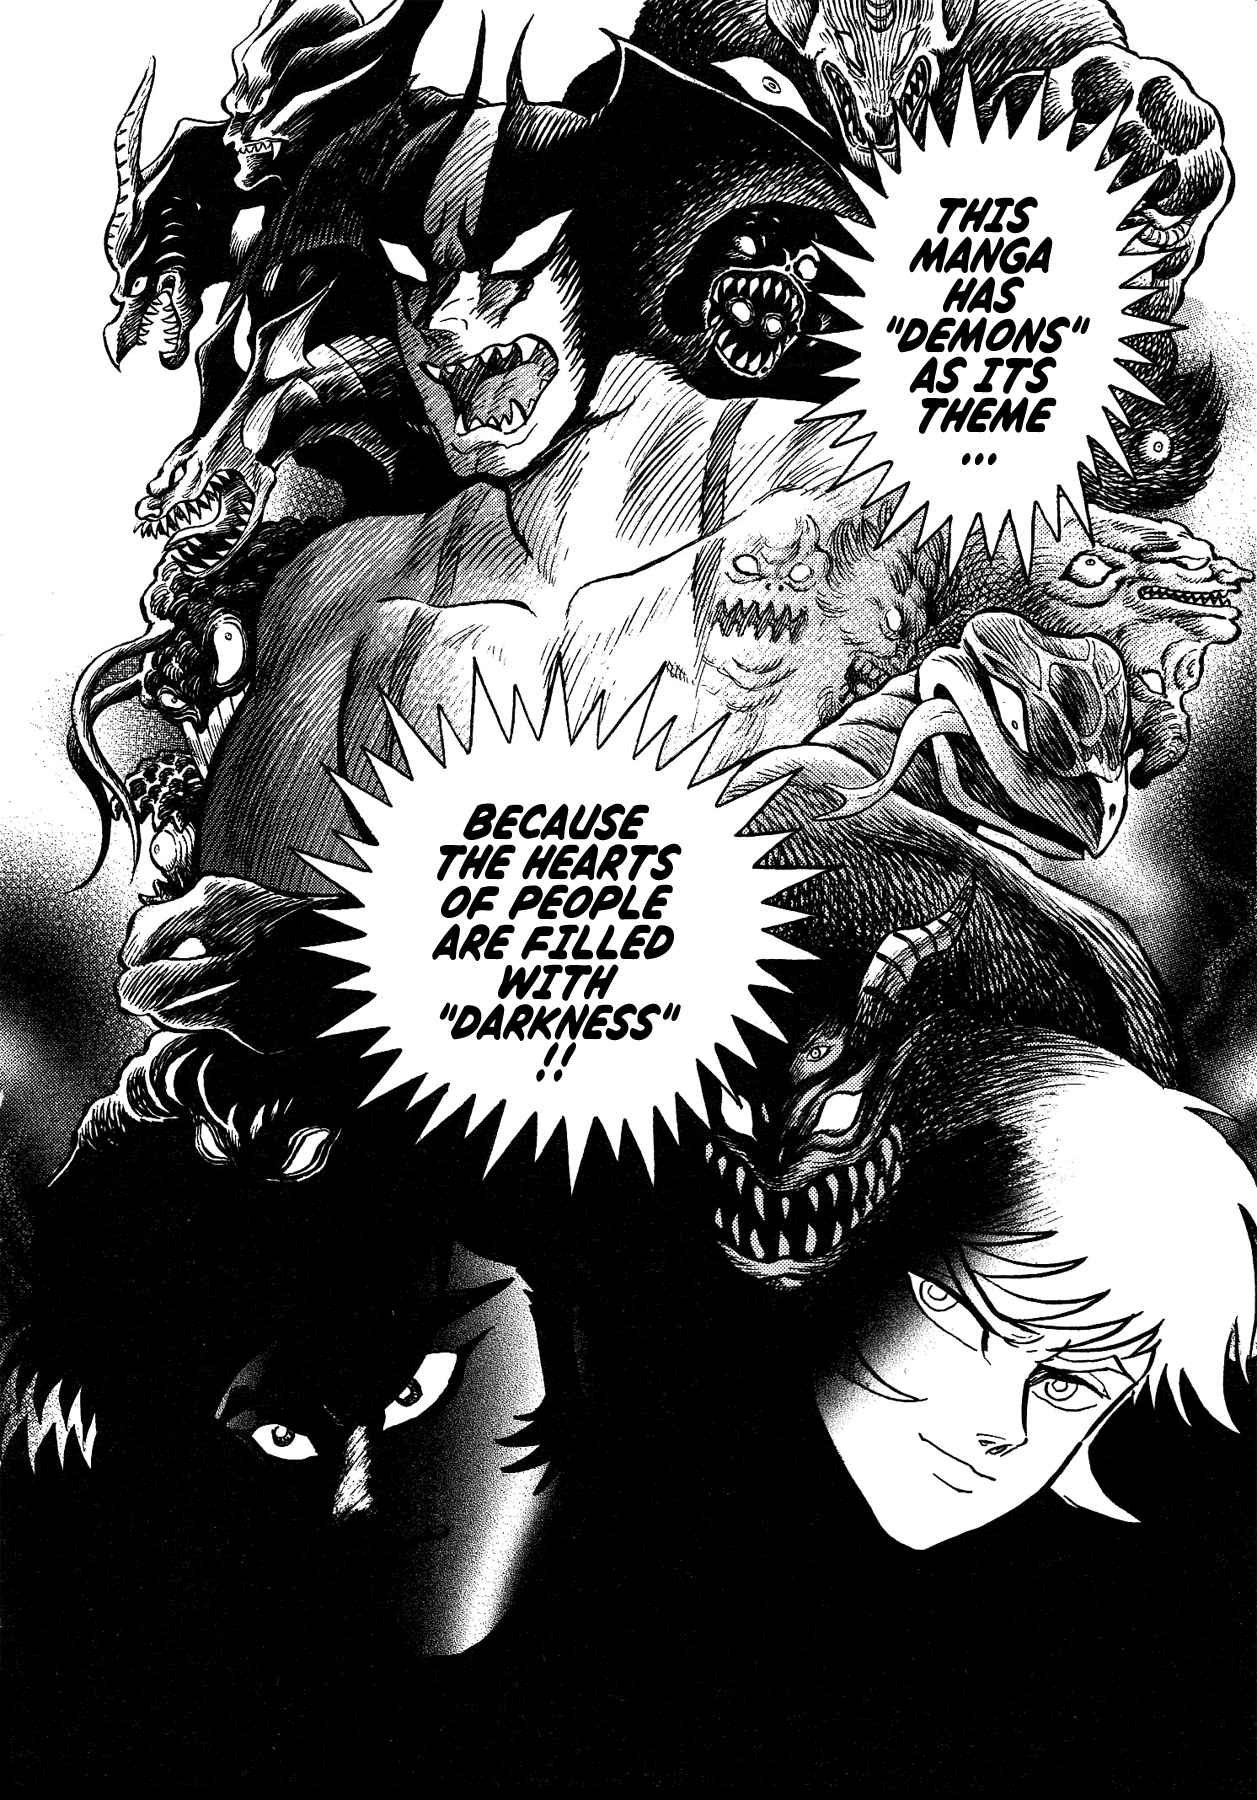 Gekiman! Devilman Chapter Vol. 6 Ch. 50 Den of Demons